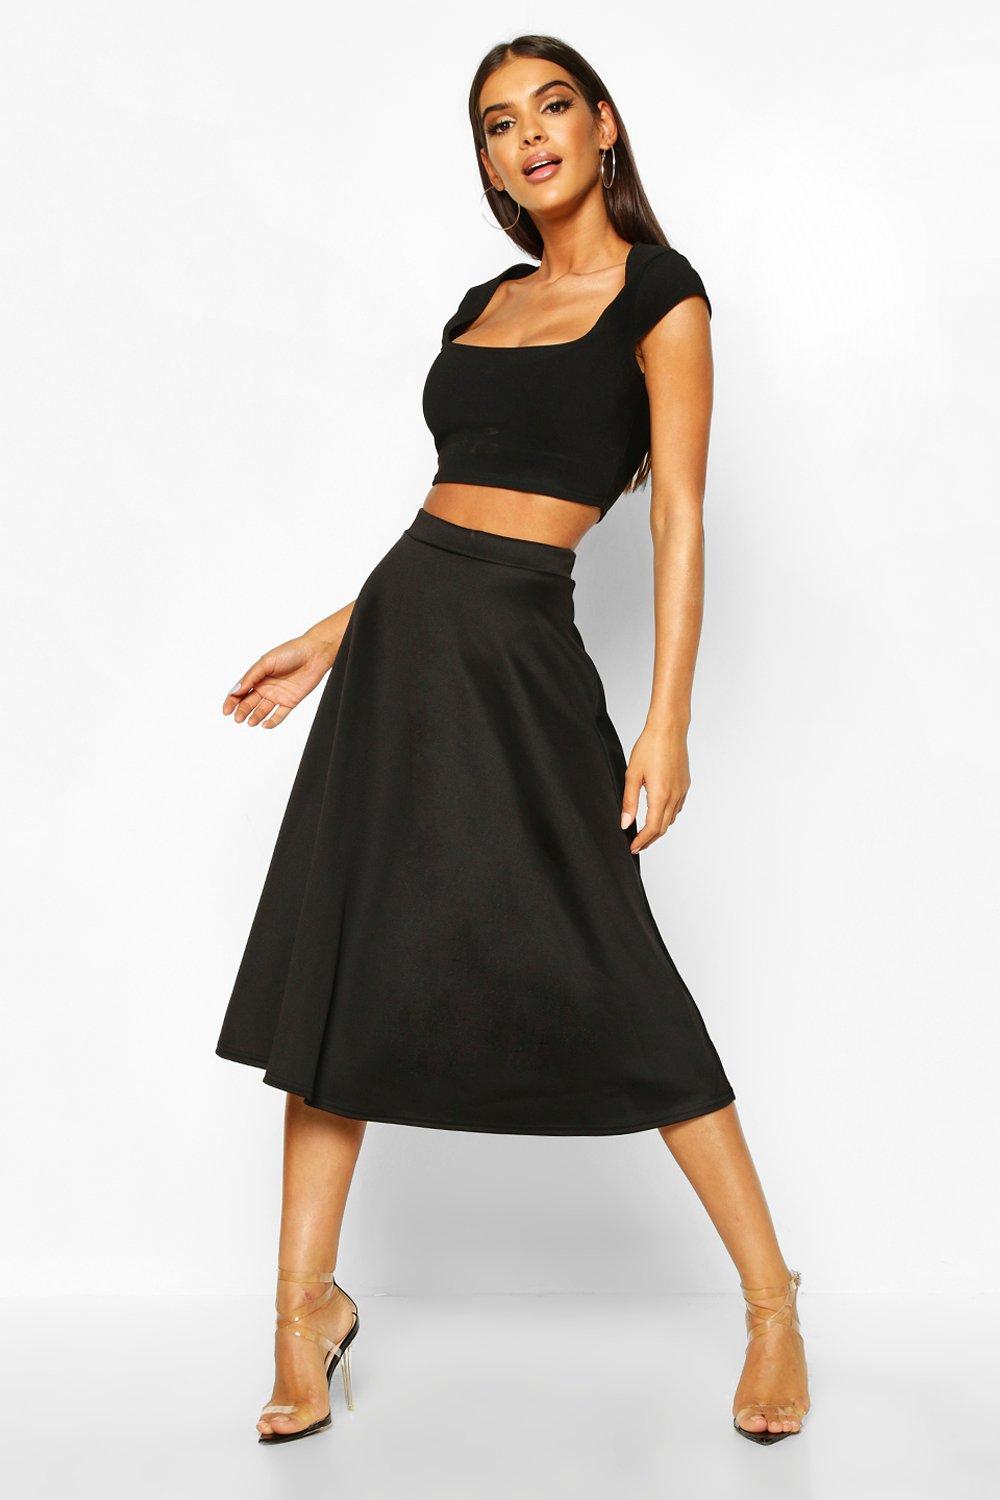 Boohoo Womens Arianna Plain Full Circle Midi Skirt | eBay